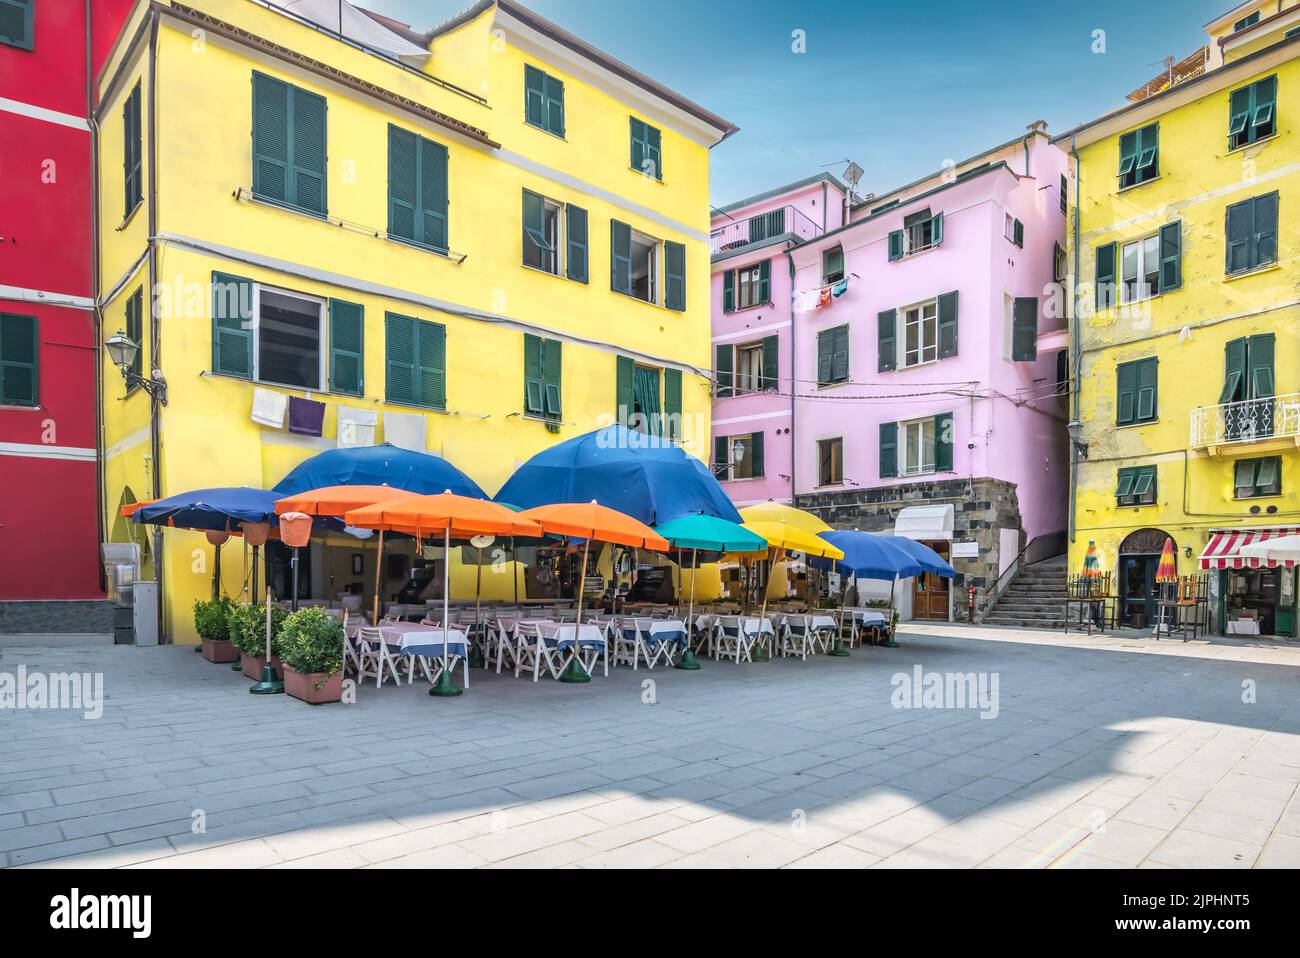 Colorful terrace umbrellas on town square, Vernazza, Cinque Terre, Italy. Stock Photo